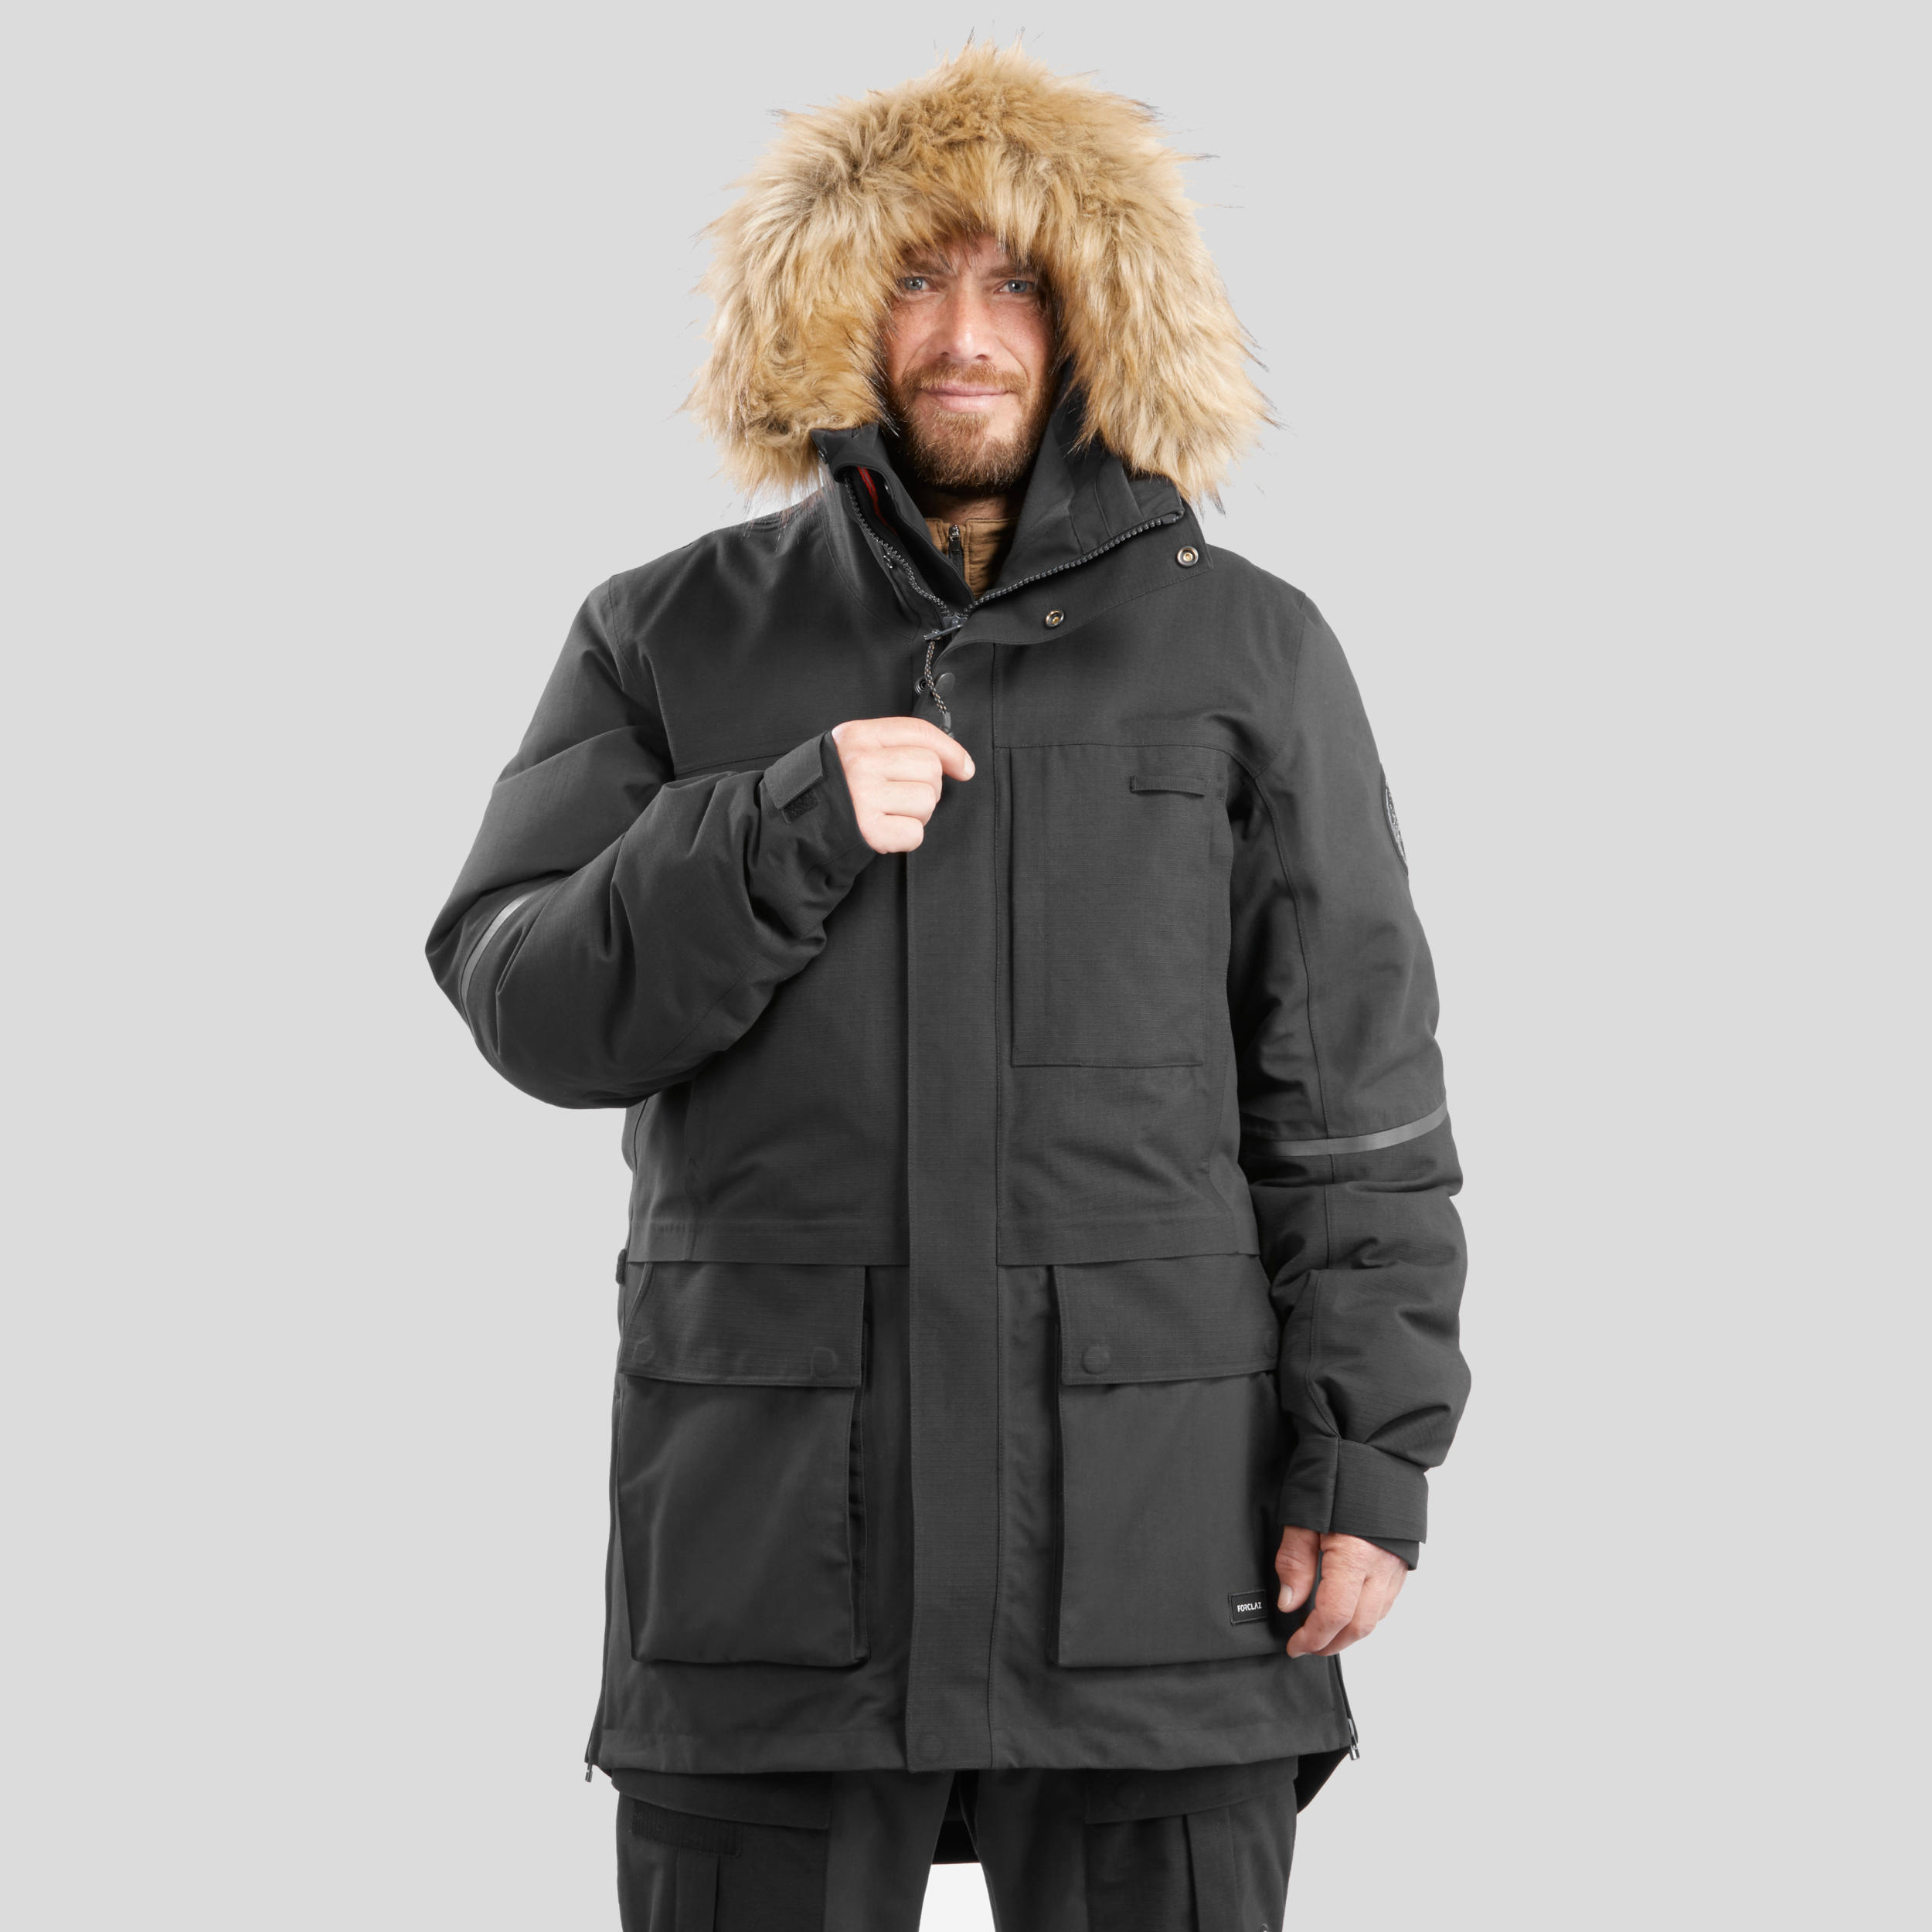 Unisex waterproof parka jacket - 900 - Black 1/21